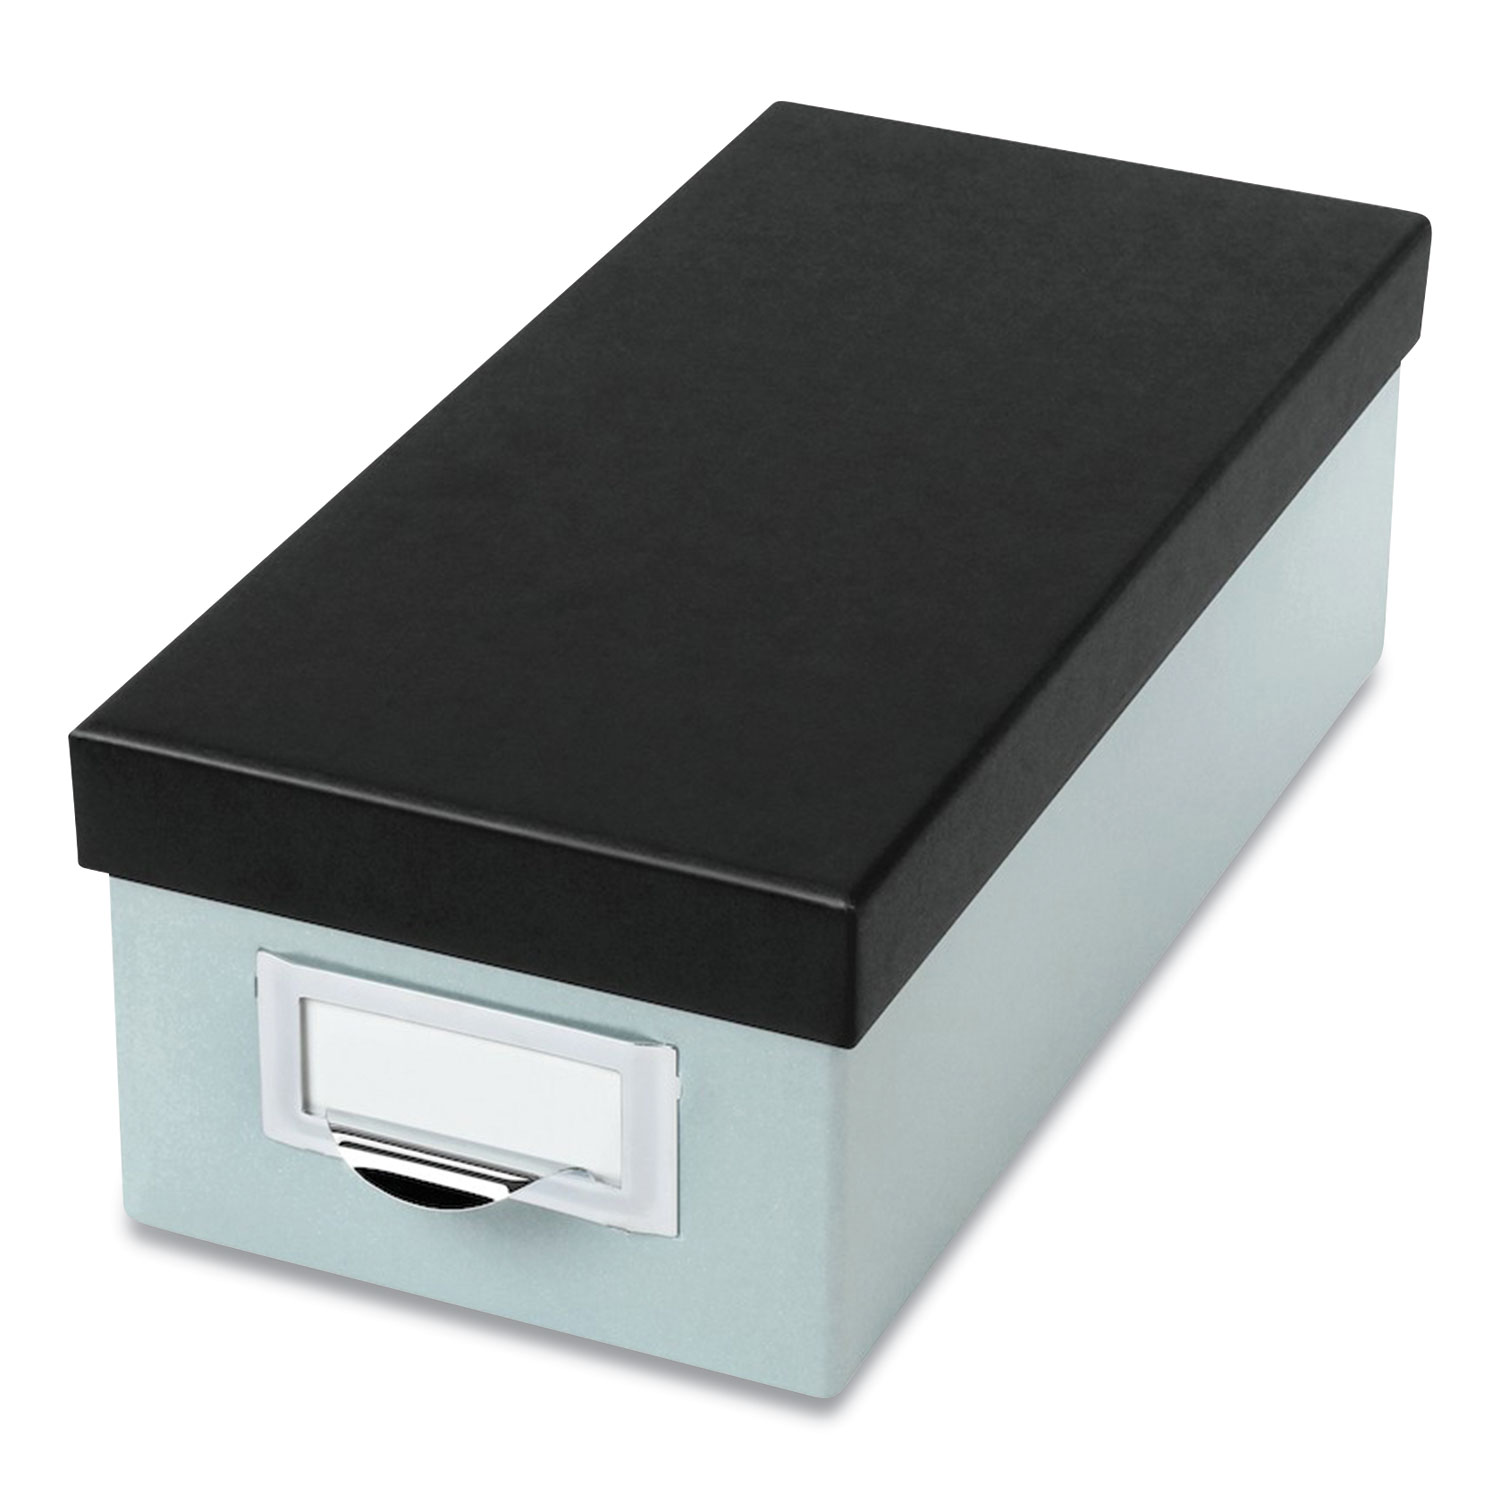  Oxford 406355 Index Card Storage Box, Holds 1,000 3 x 5 Cards, Pressboard, Blue Fog/Black, 5.5 x 11.5 x 3.88 (OXF24401224) 